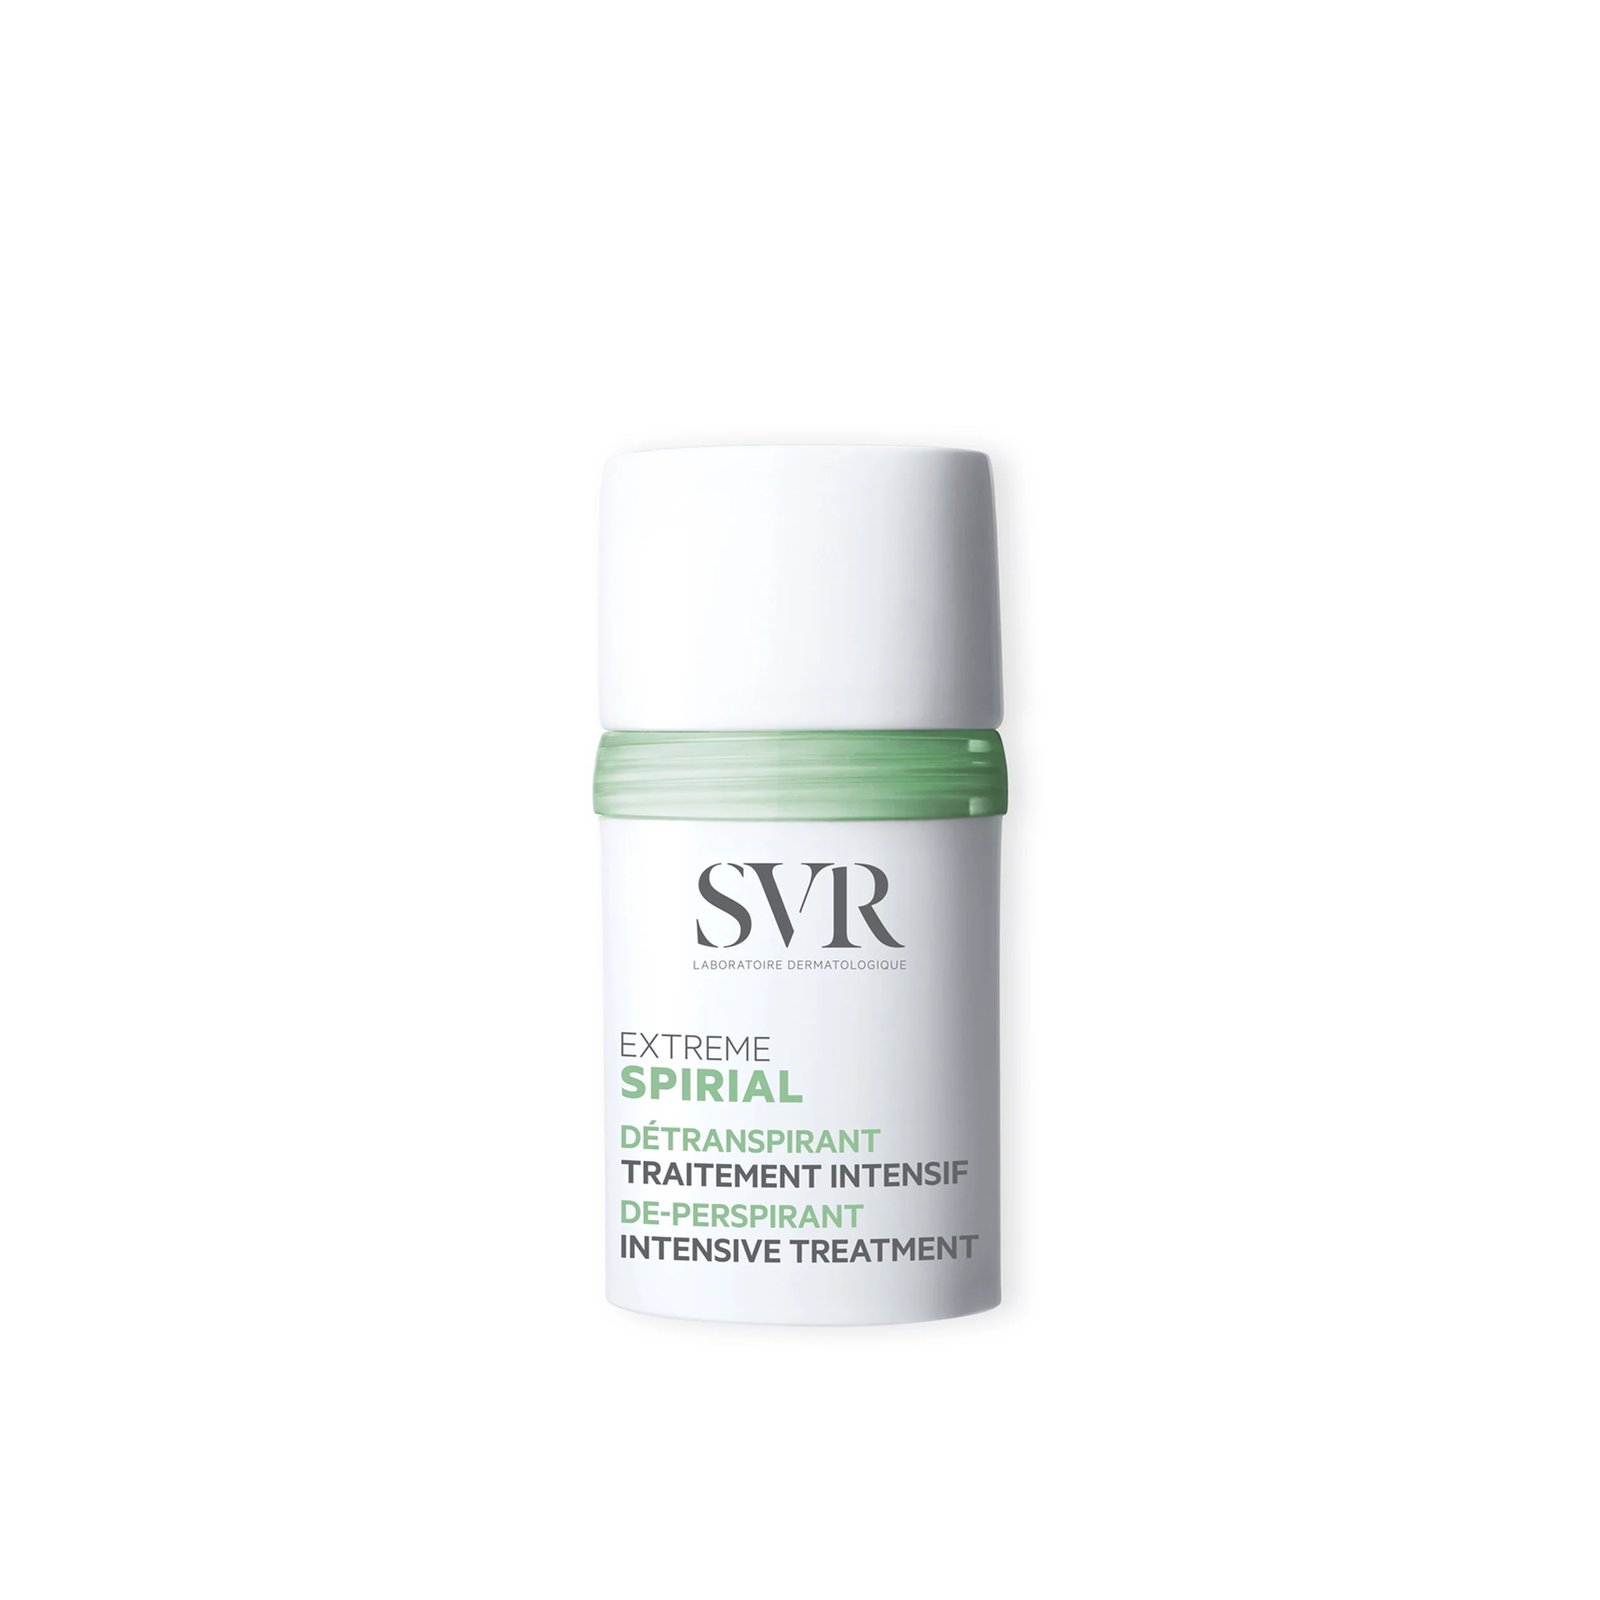 SVR Spirial Extreme Intensive De-Perspirant Treatment 20ml (0.68fl oz)